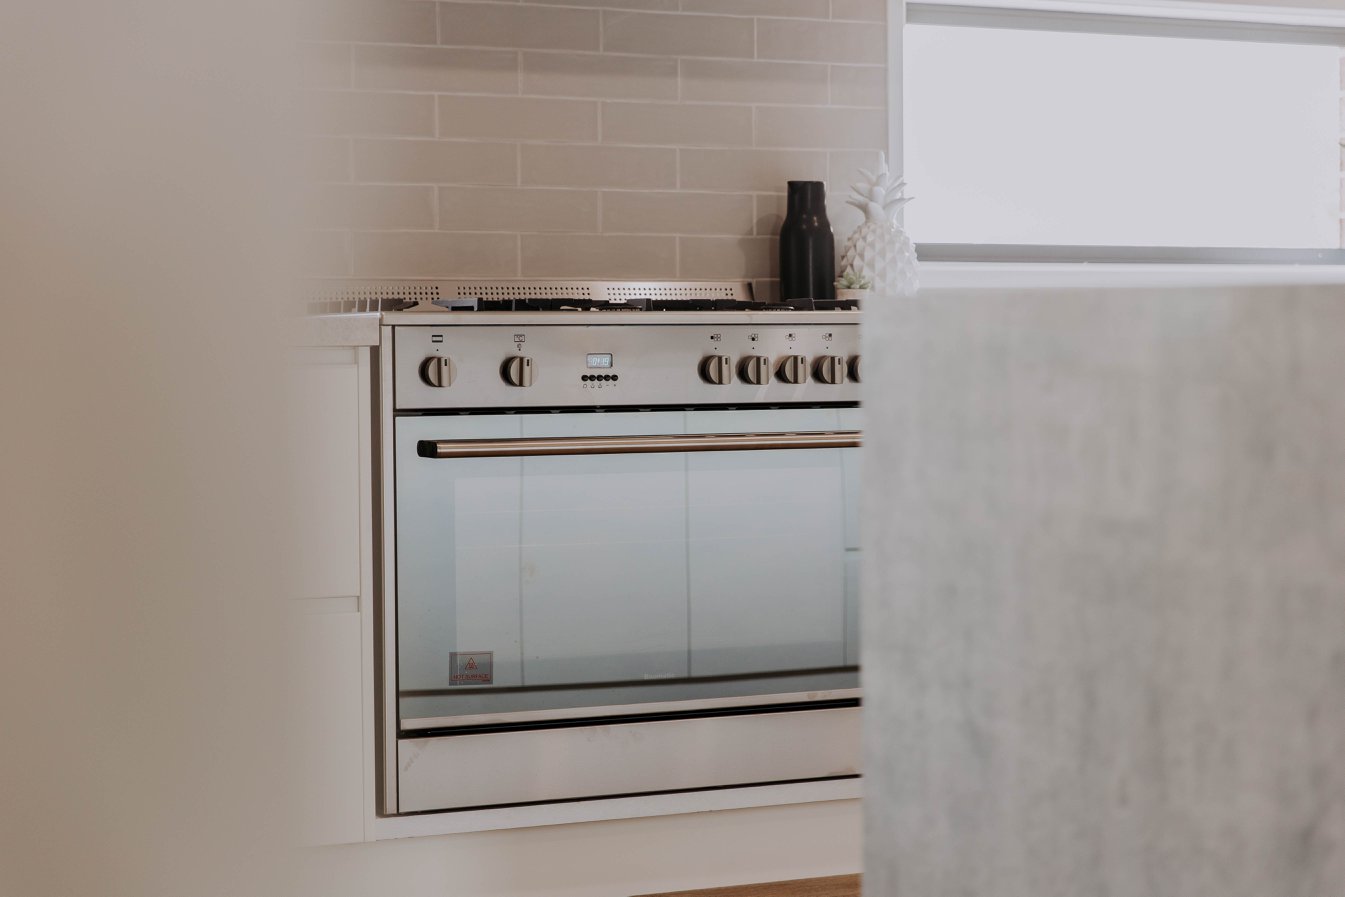 021 Alatalo Bros - kitchen - display home - cook top - kitchen design - oven - custom homes - kitchen cabinet design - cabinets - interior design - homes - builders - display home